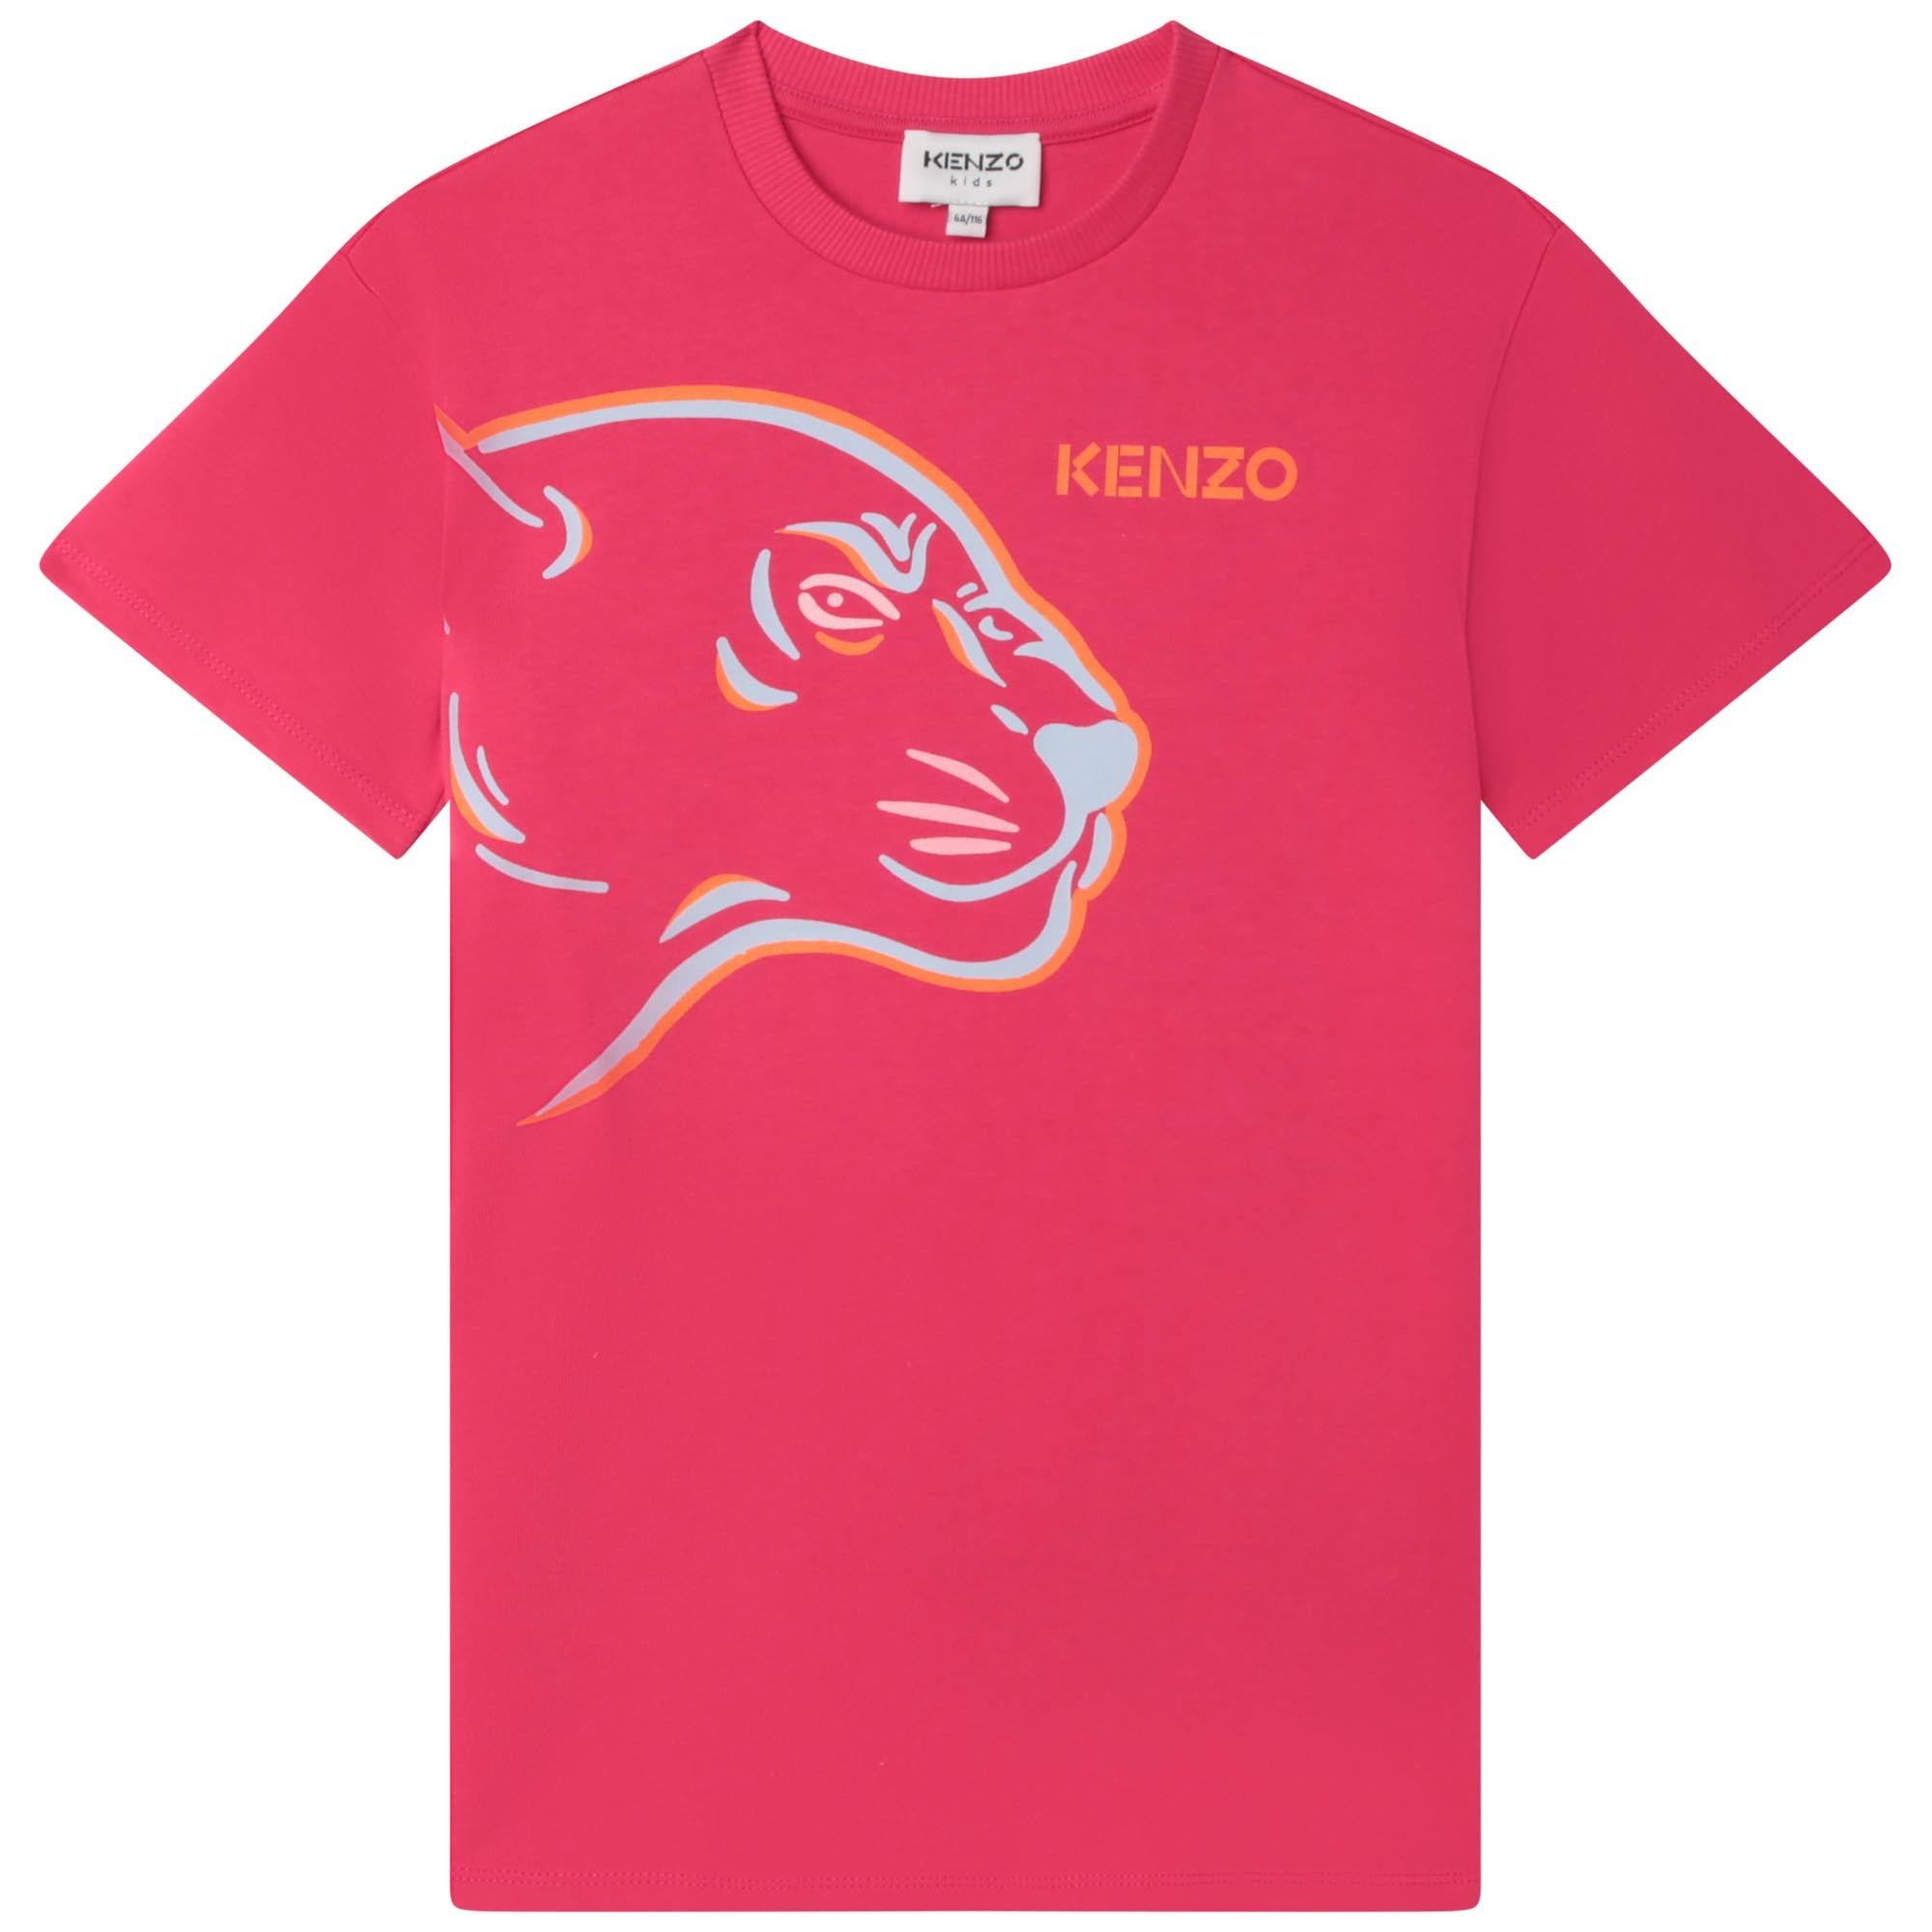 Kenzo Fuchsia T-Shirt Dress